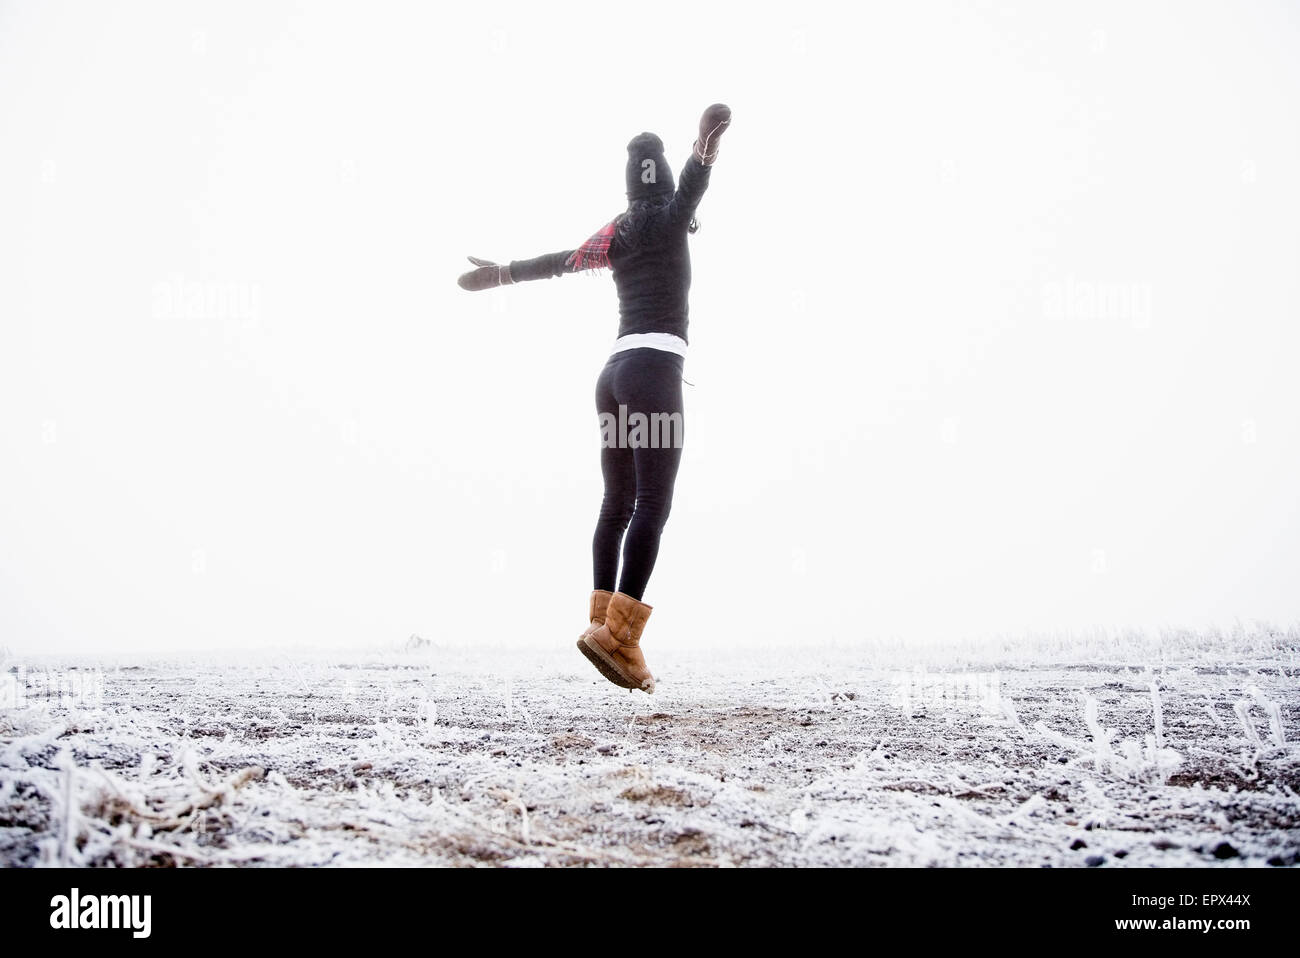 USA, Colorado, Woman jumping outdoors Stock Photo